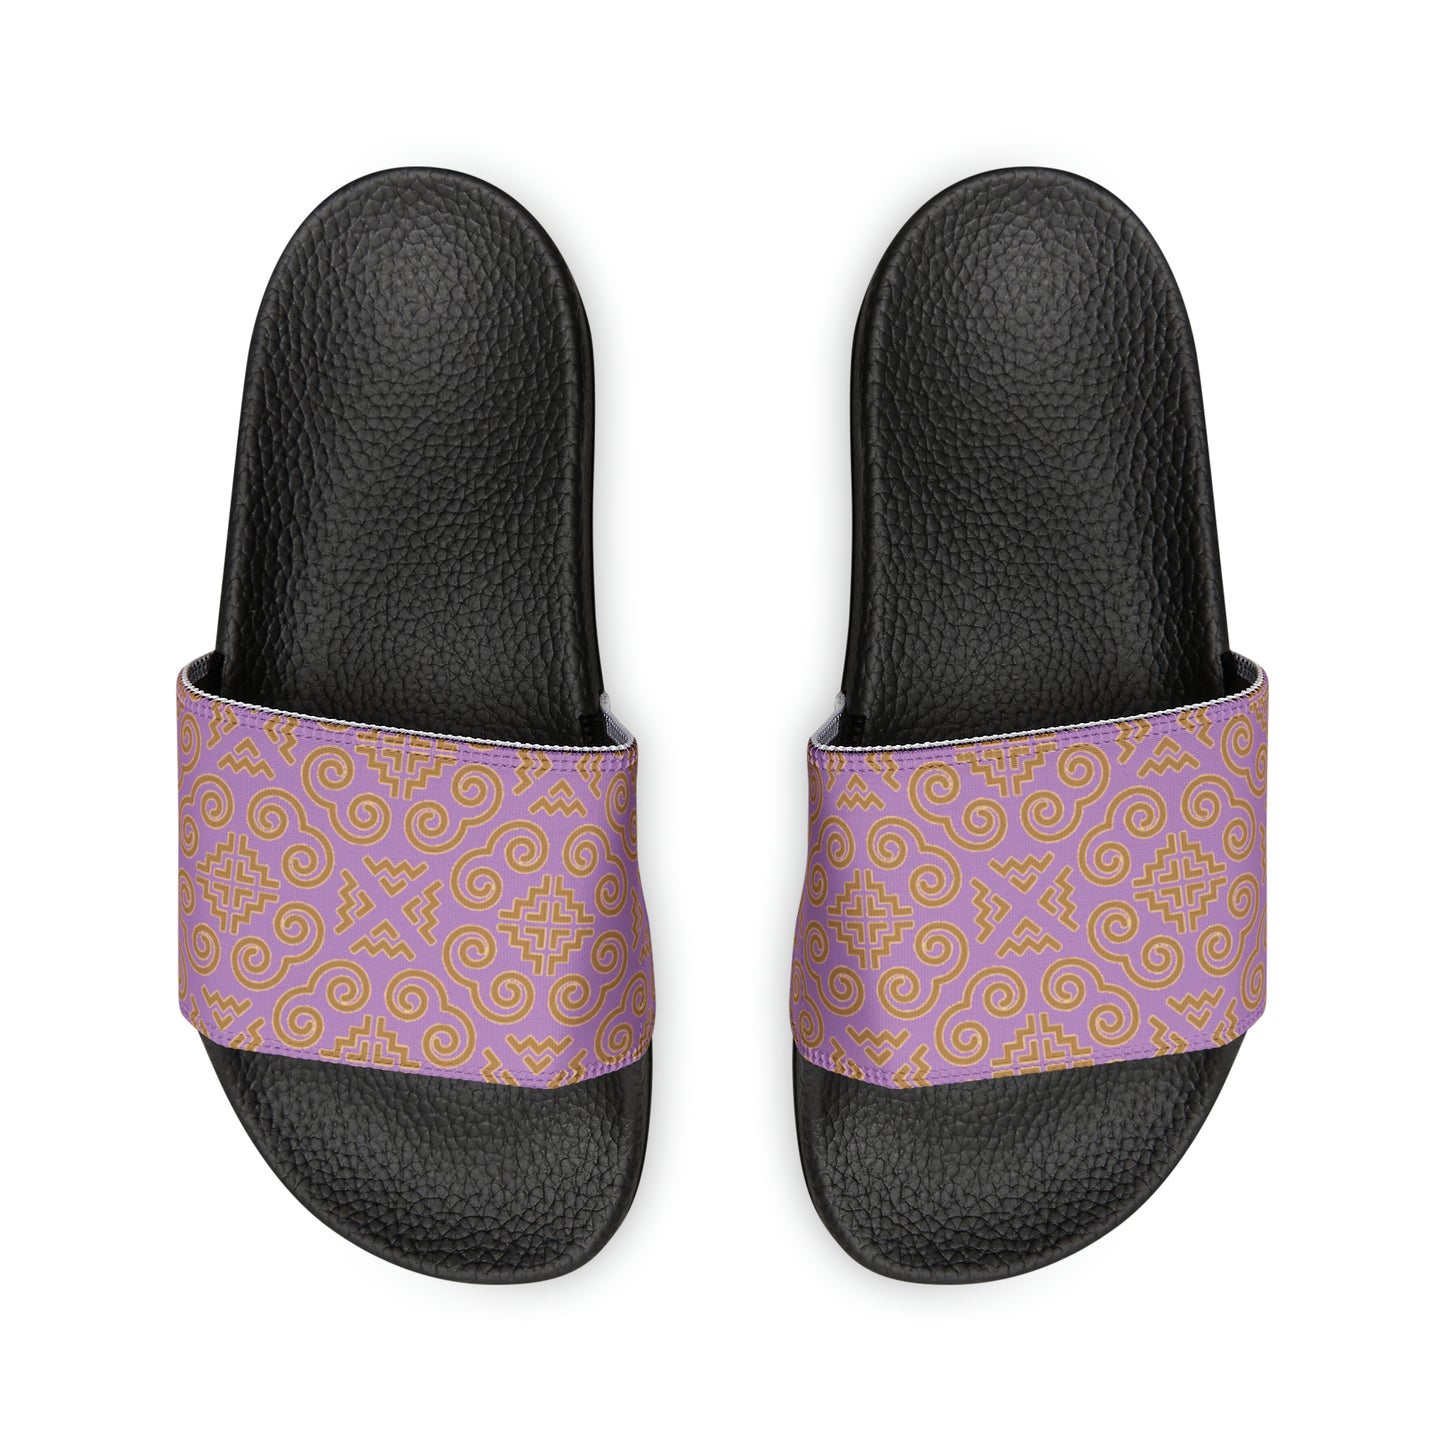 Hmong Inpired Slide Sandals